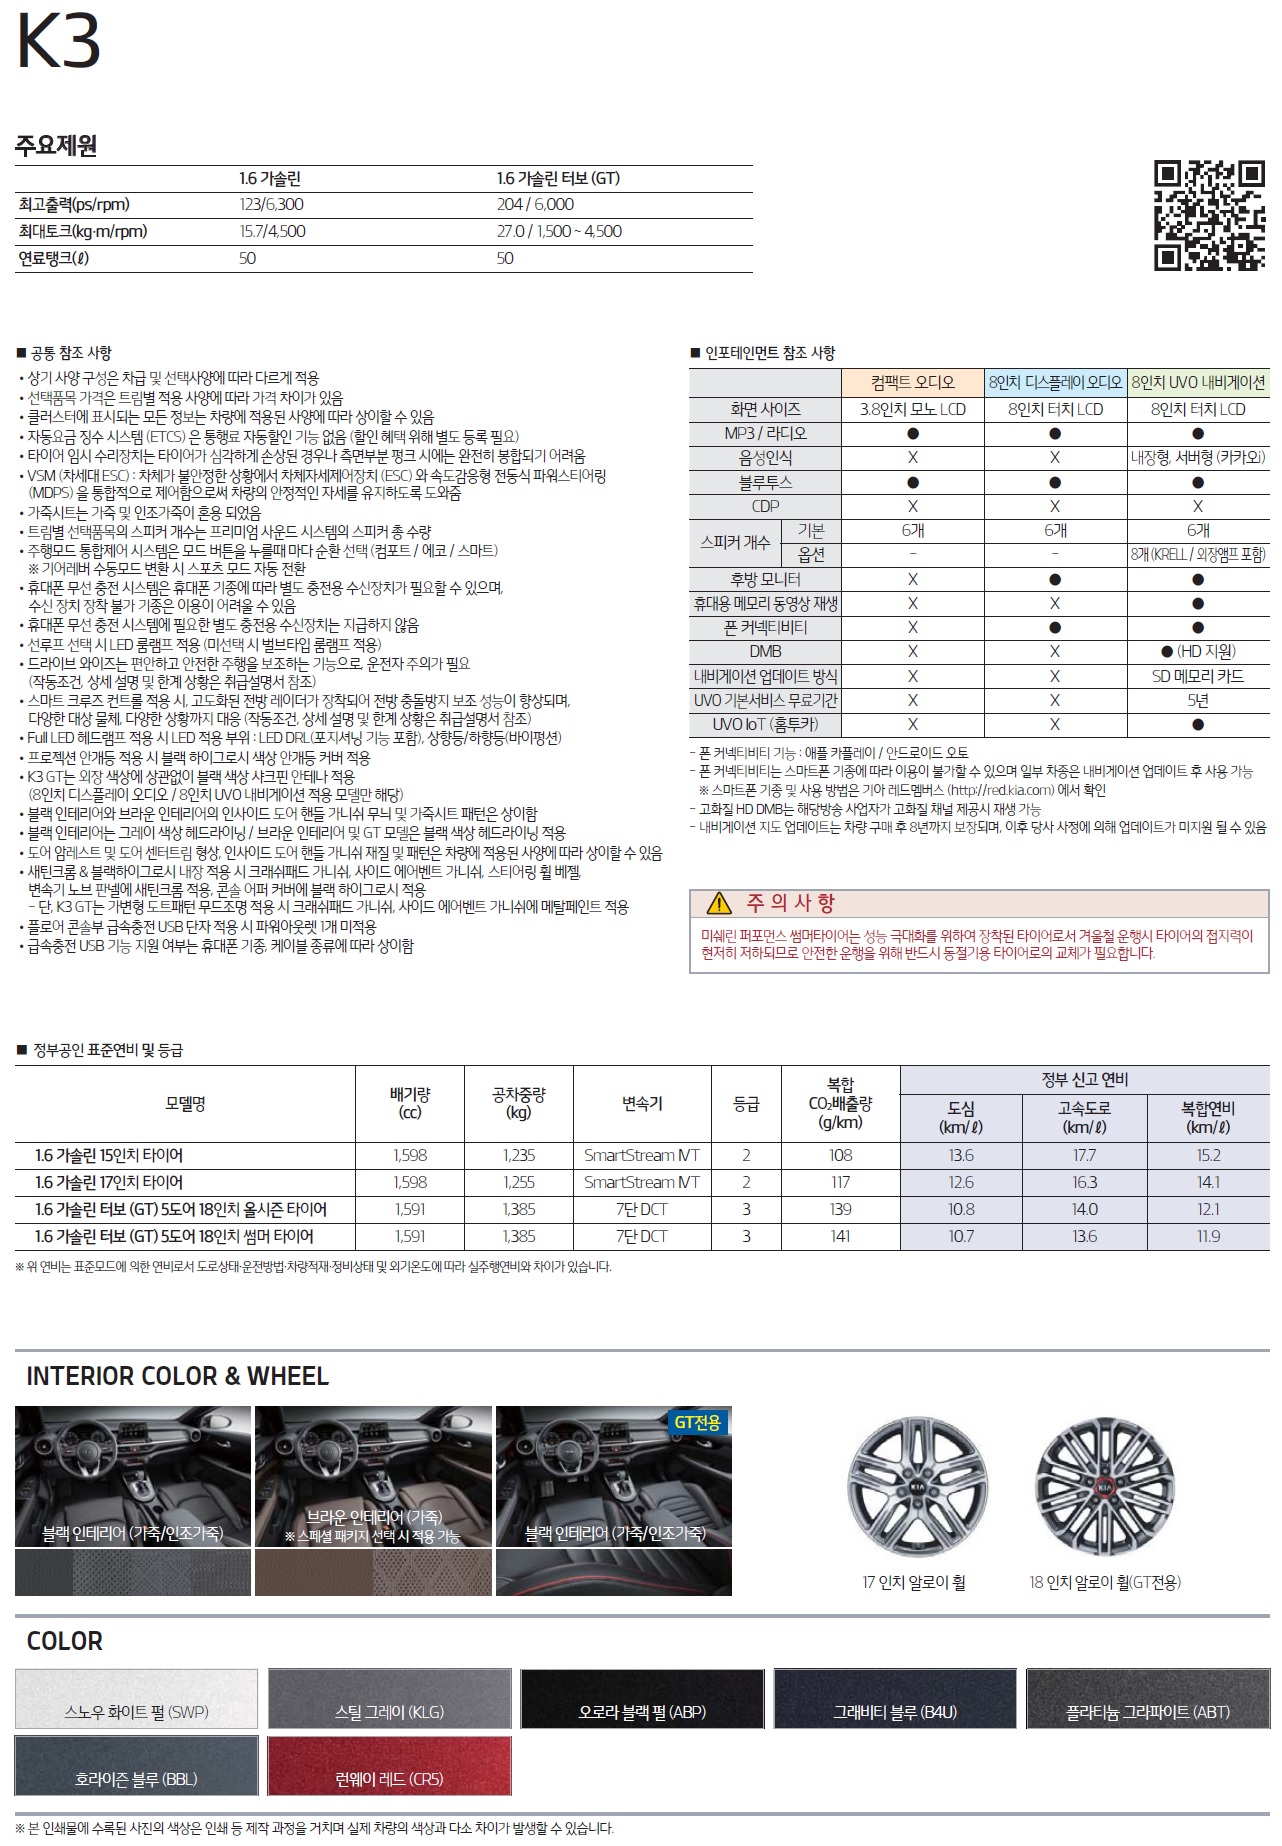 K3 GT 가격표 - 2020년 04월 -2.jpg